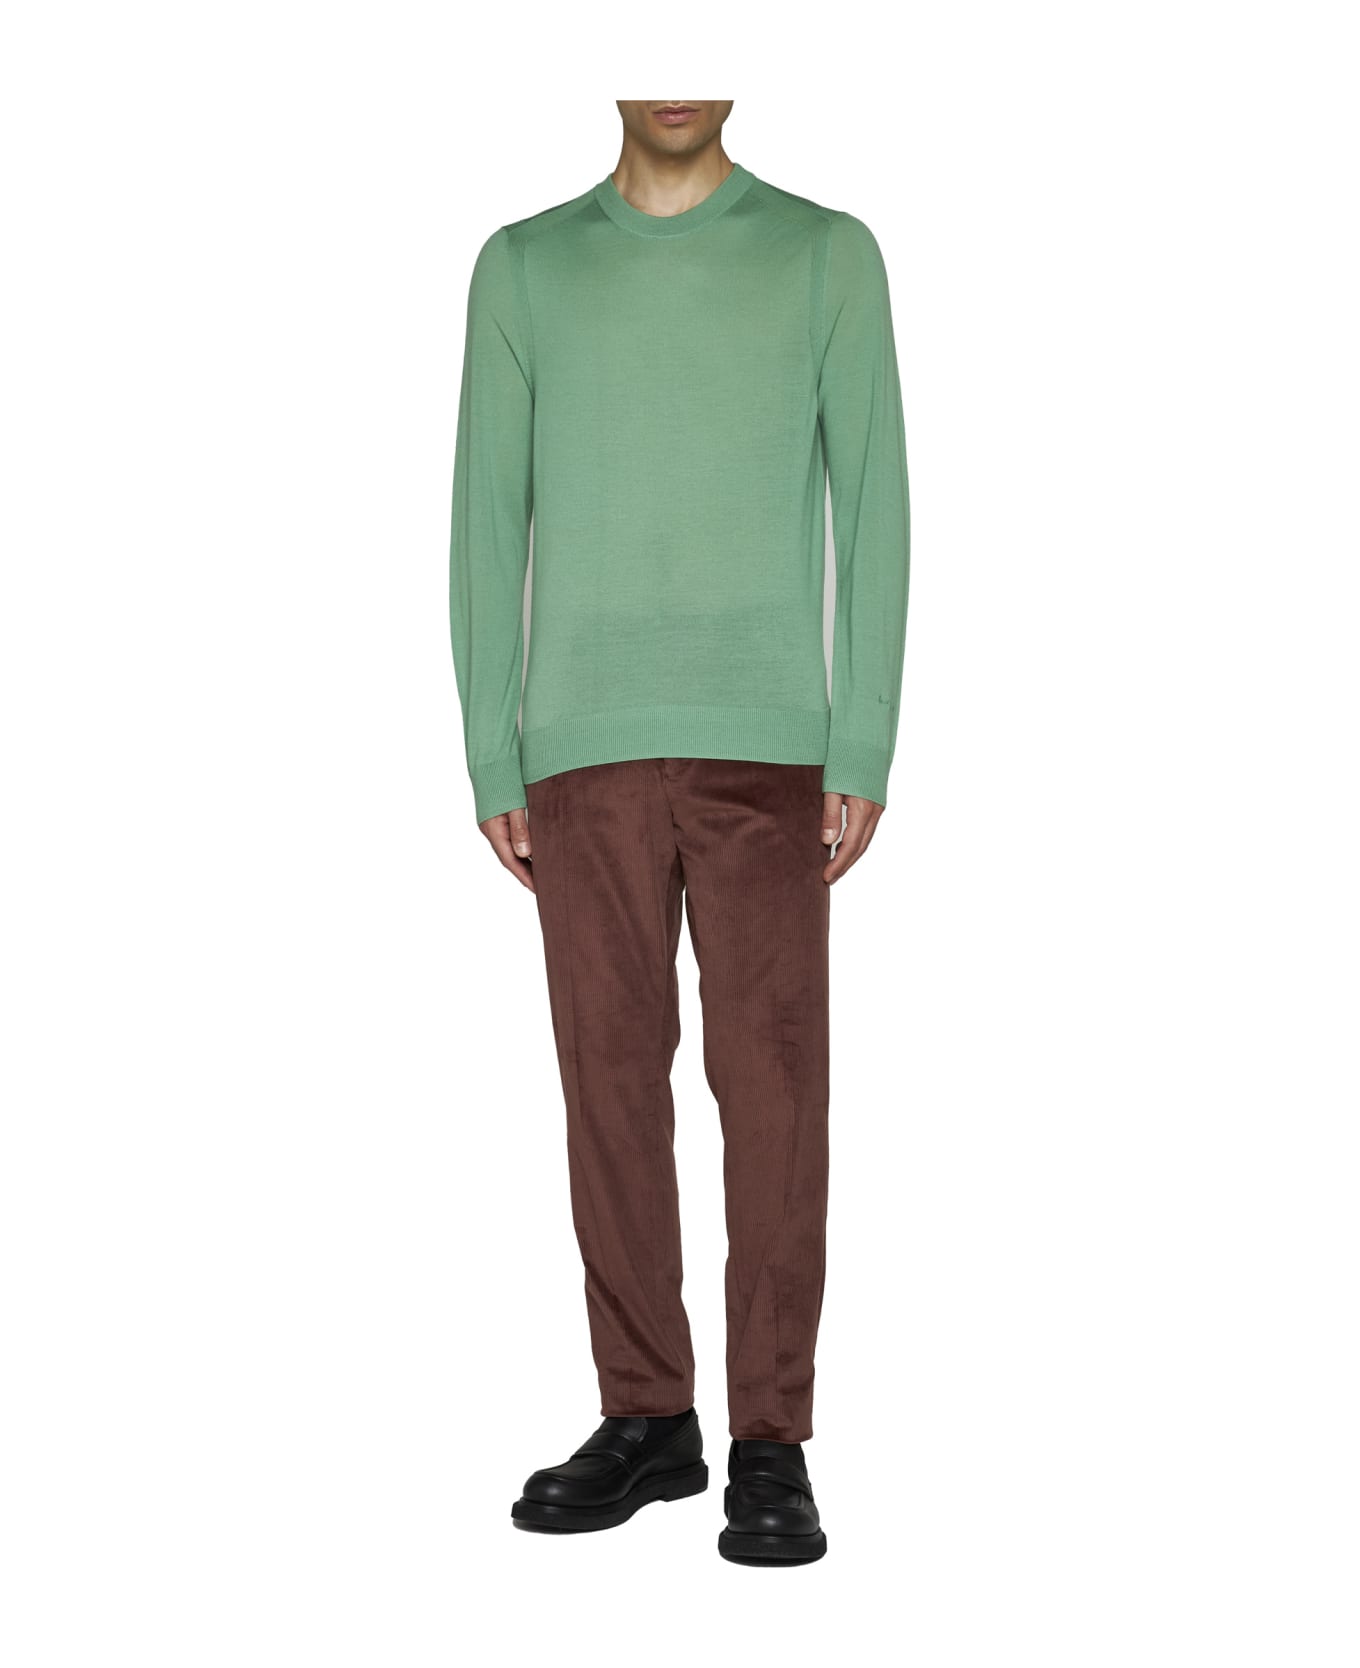 Paul Smith Sweater - Greens